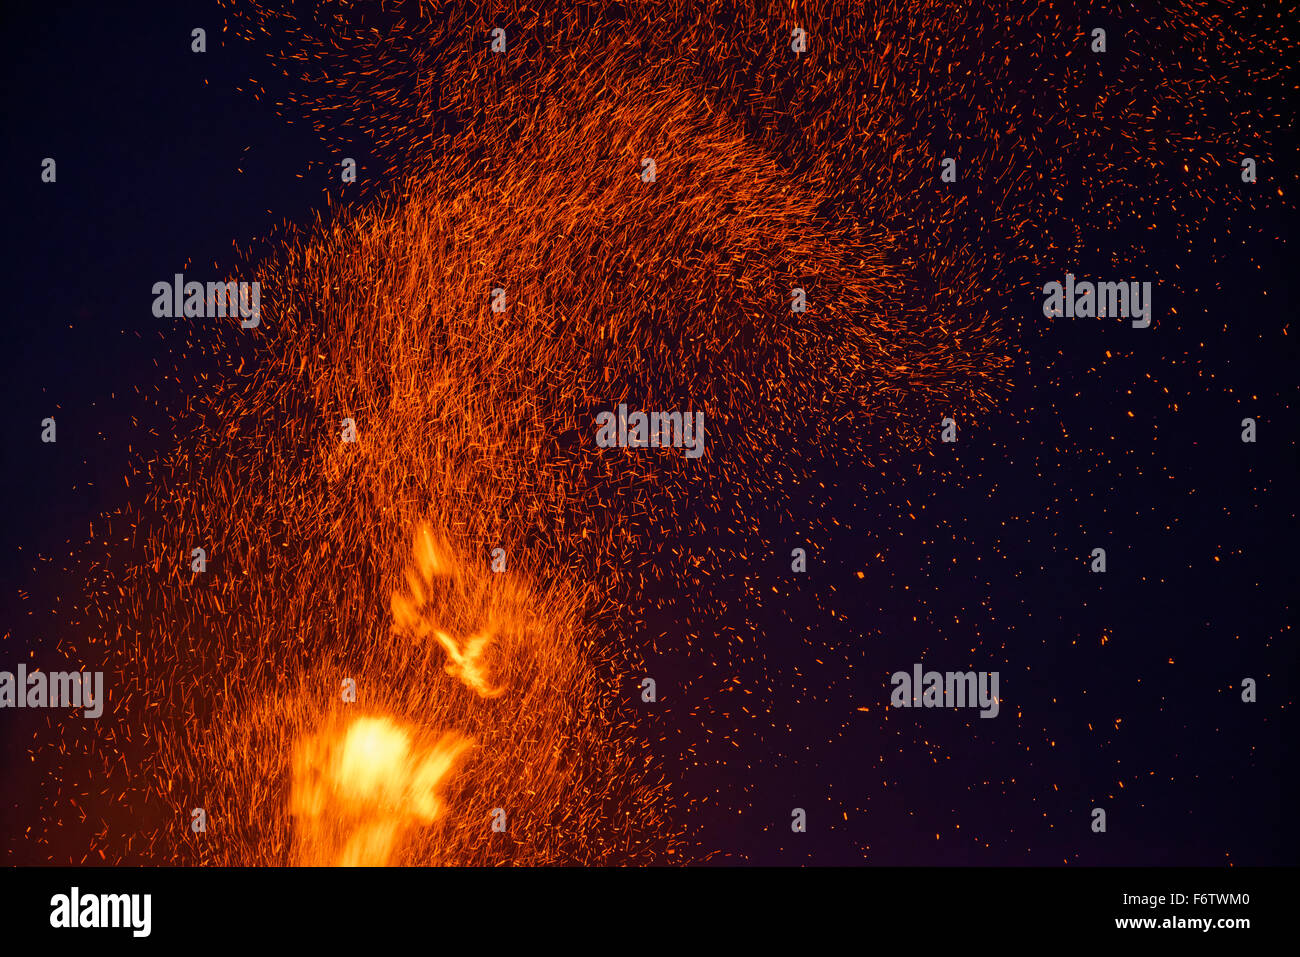 Germany, Bavaria, Midsummer bonfire at night Stock Photo